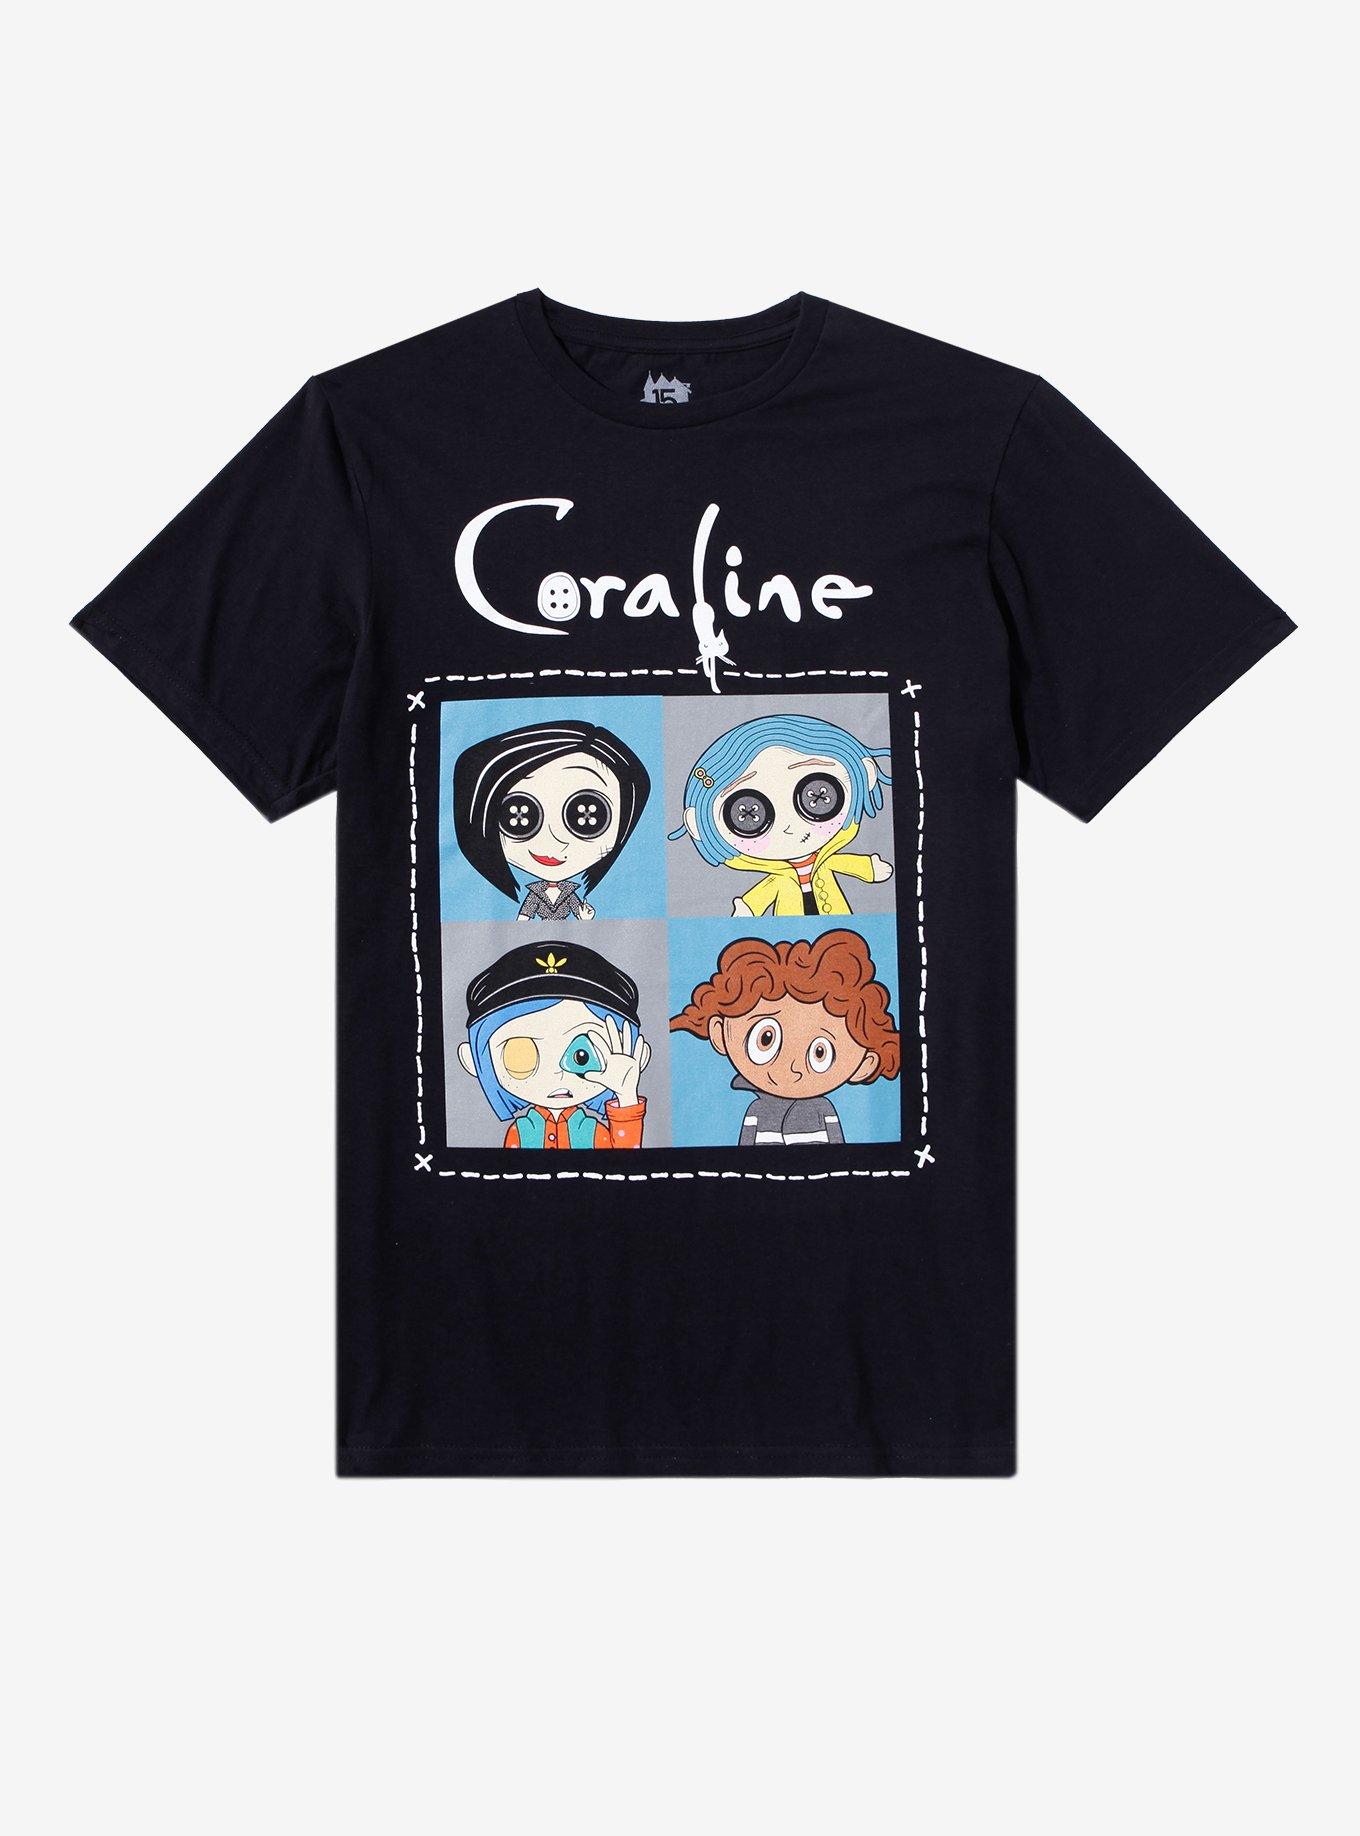 Coraline X Spooksieboo Grid T-Shirt